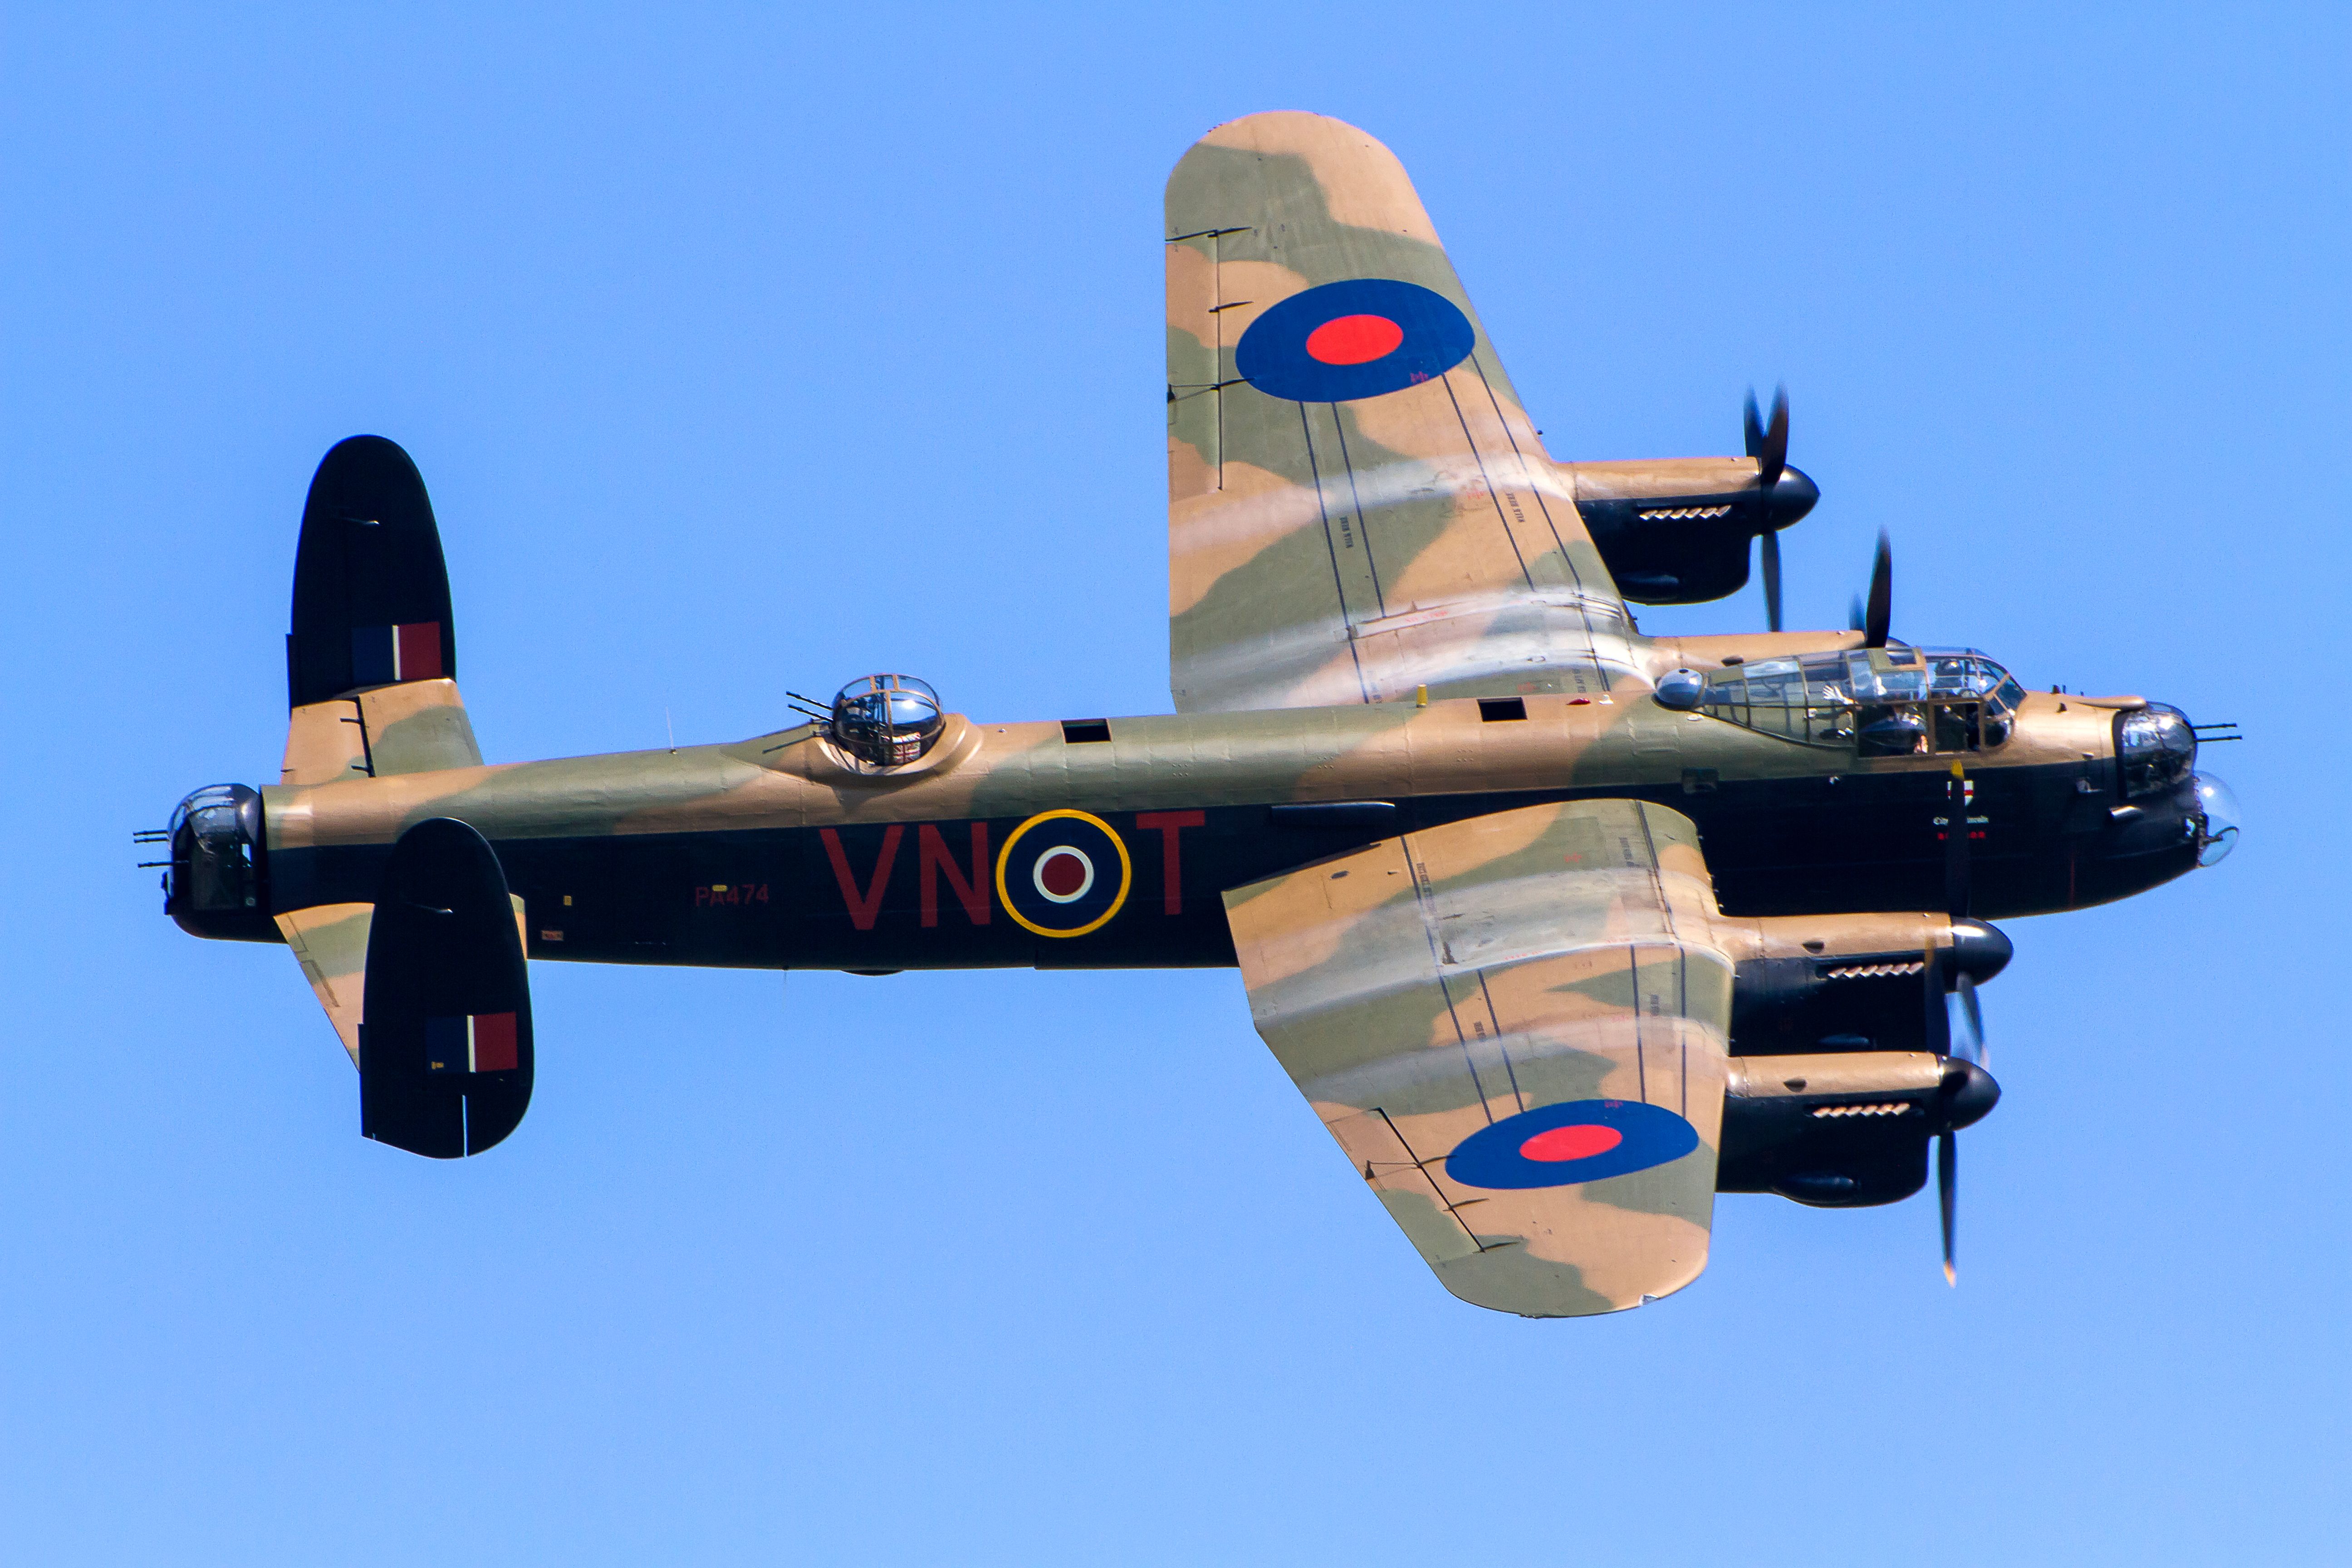 An Avro Lancaster Flying in the sky.